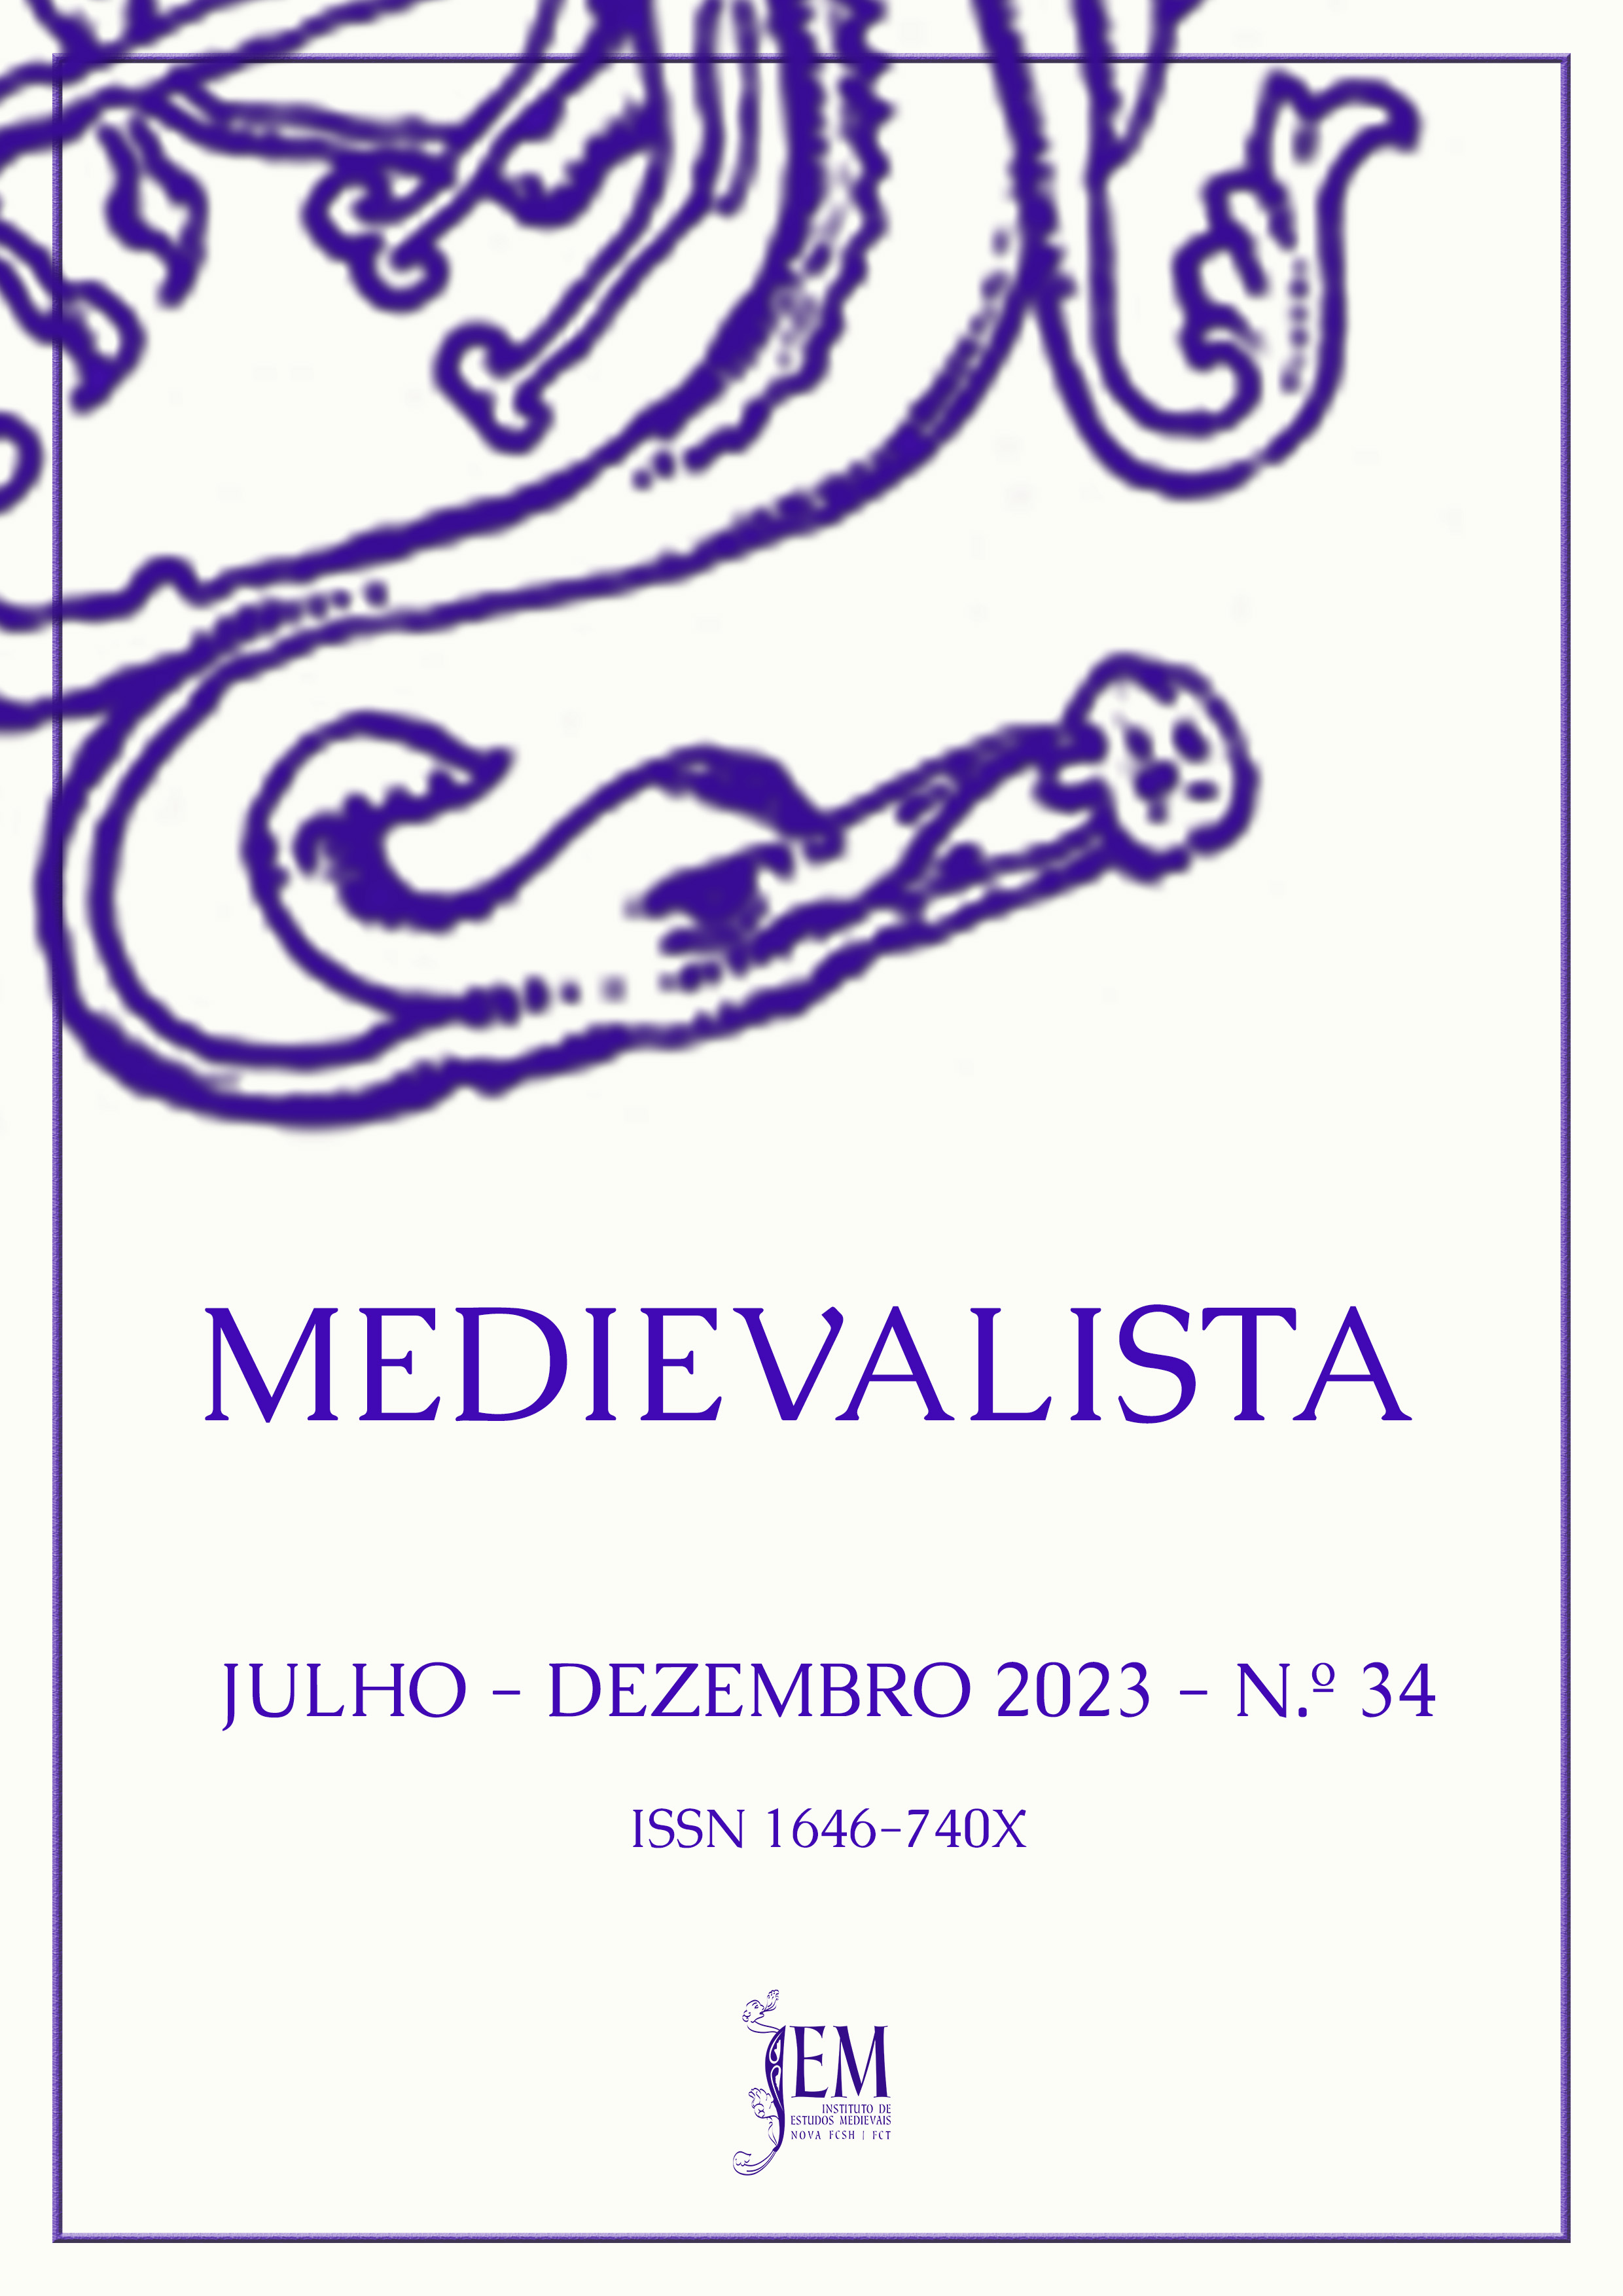 					Ver N.º 34 (2023): Medievalista - Dossier "Crónicas Medievais"
				